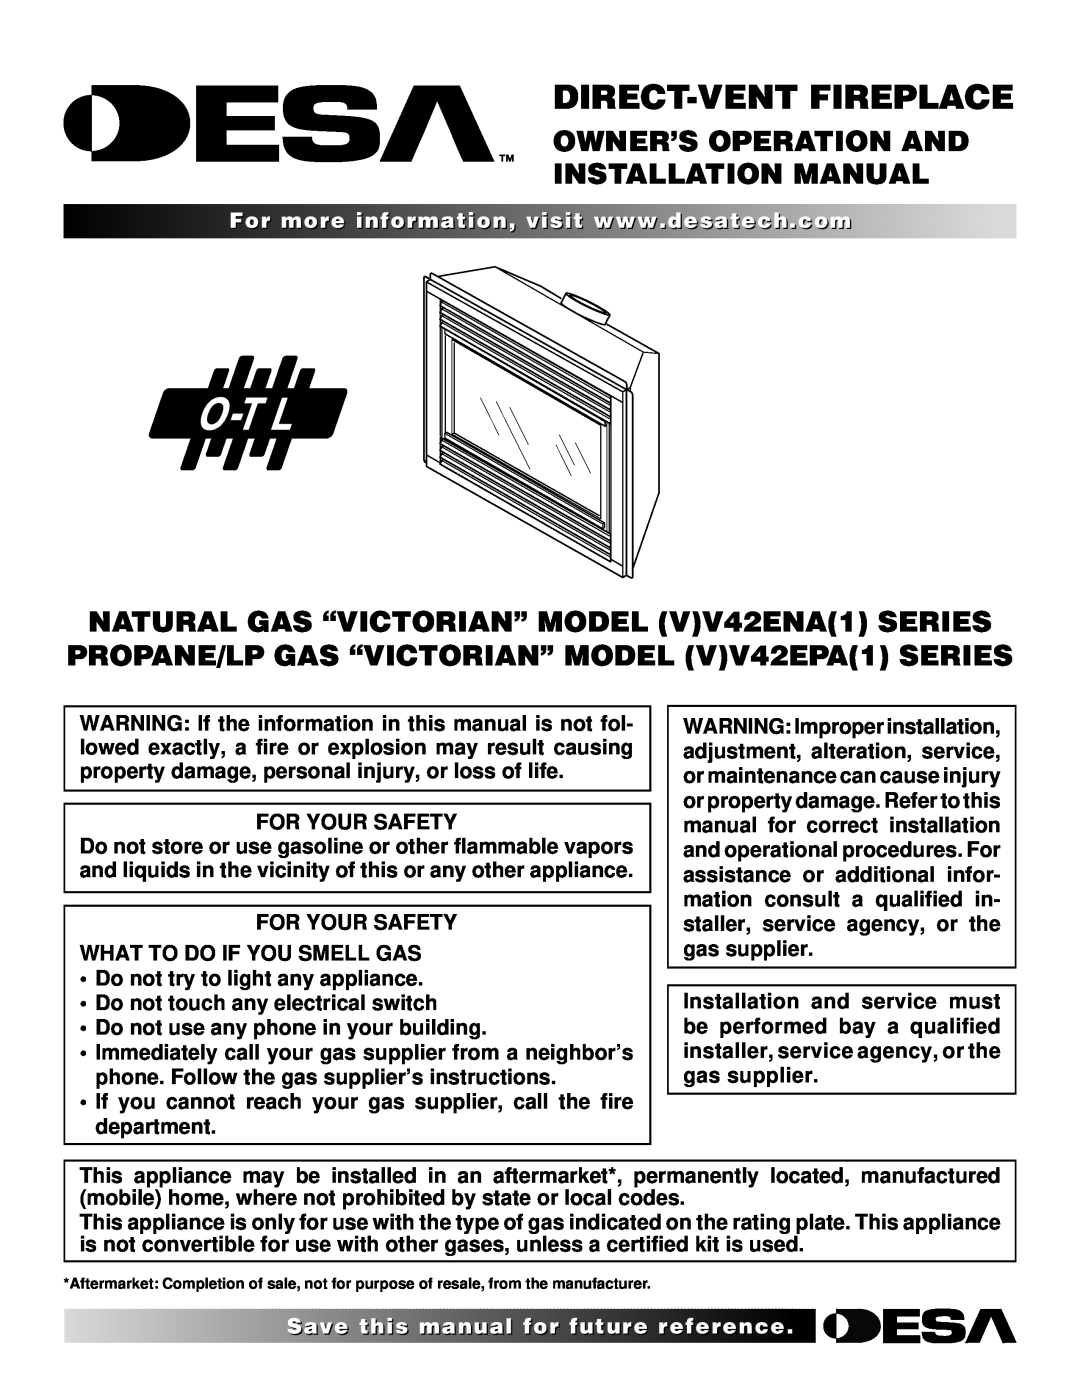 Desa (V)V42EPA(1) installation manual Owner’S Operation And Installation Manual, For Your Safety, Direct-Ventfireplace 